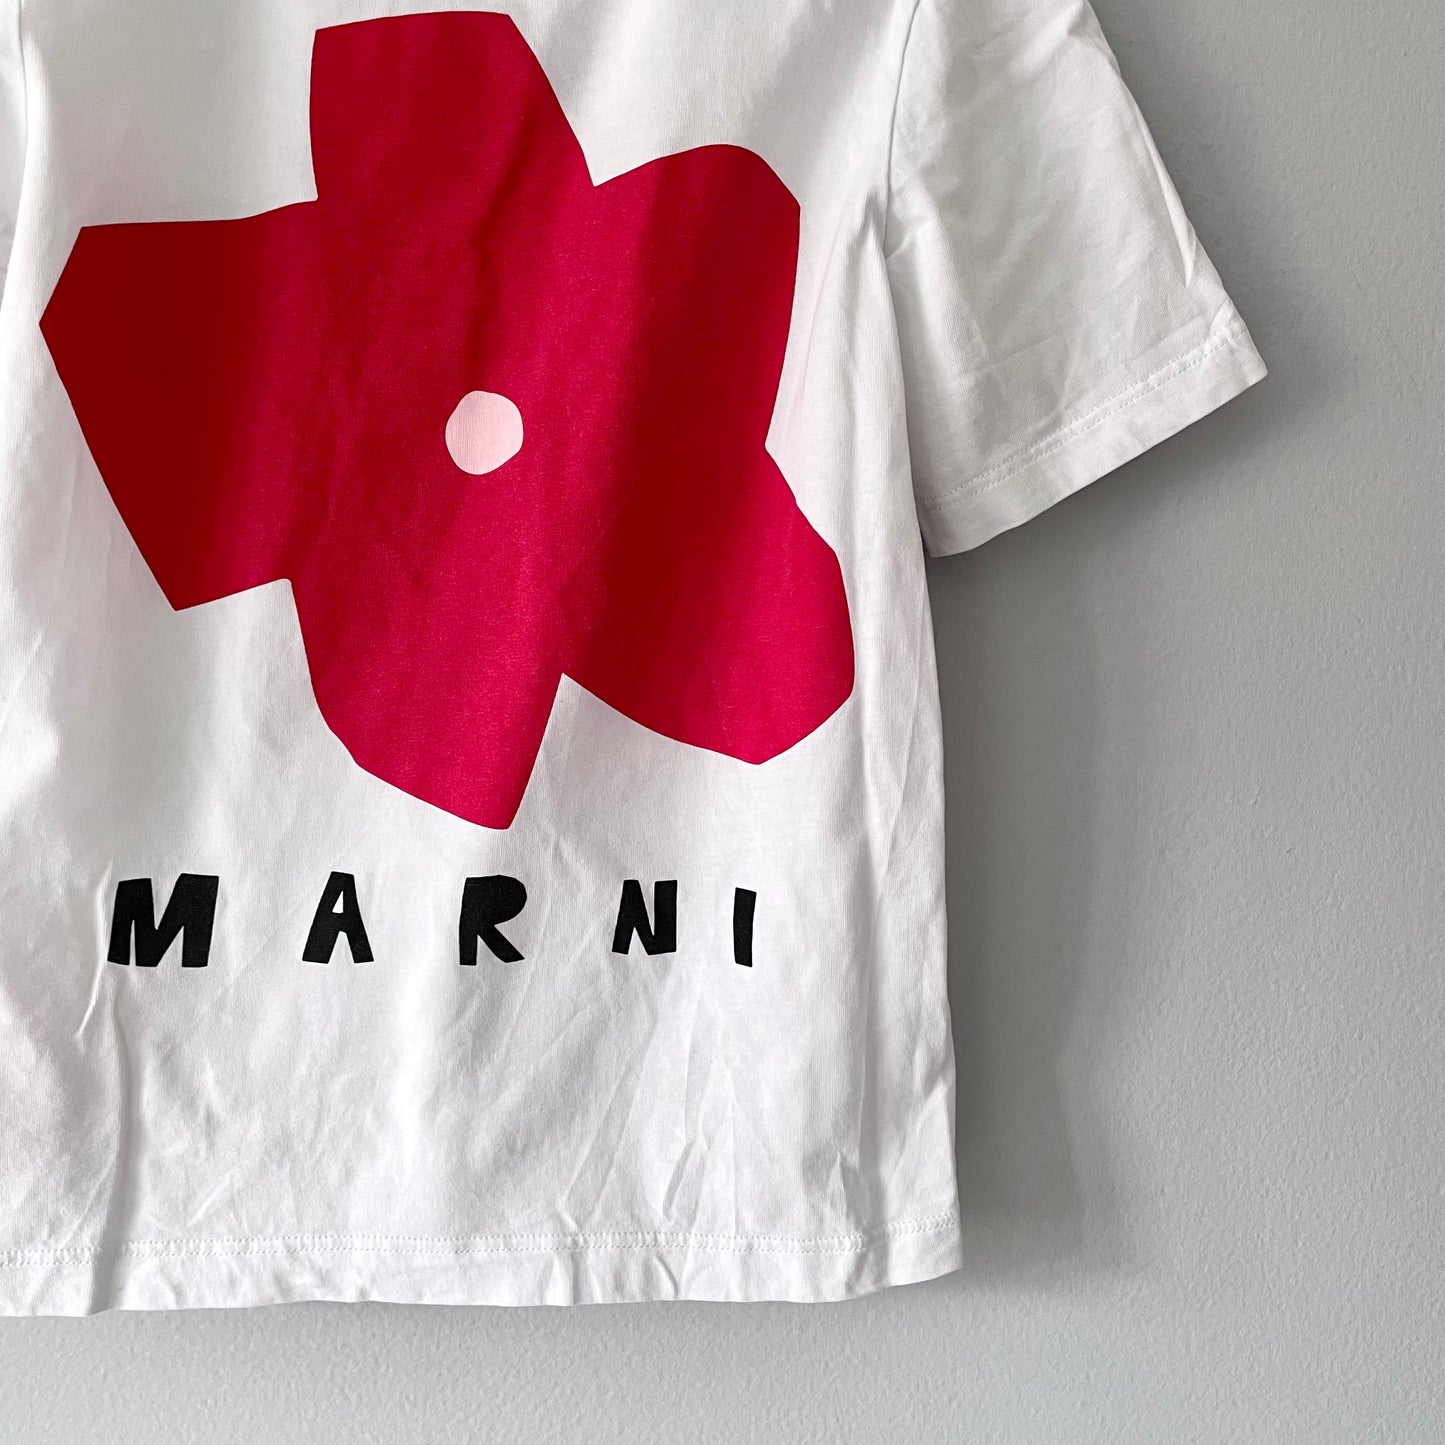 Marni / Short sleeve T-shirt / 8Y